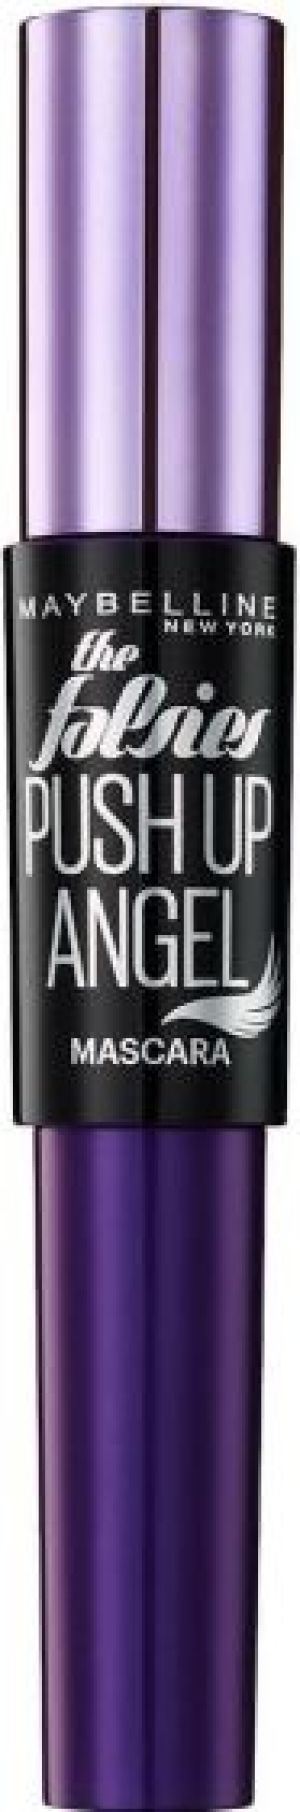 Maybelline  The Falsies Push-Up Angel Mascara tusz do rzęs Very Black 9.5ml 1